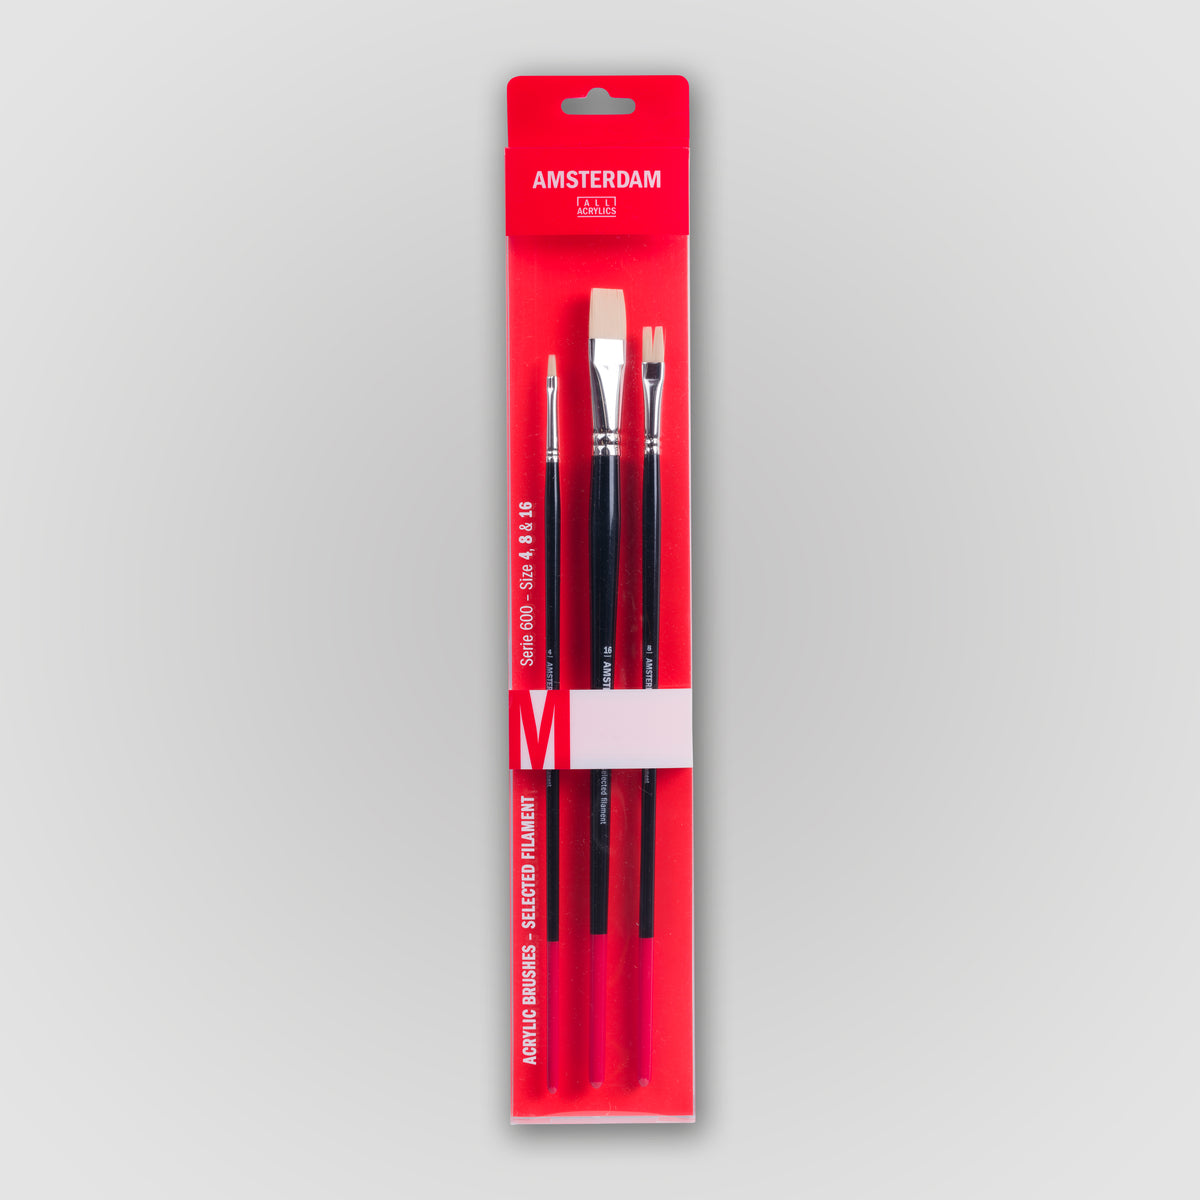 Amsterdam Brush Set 600, M (4-8-16 mm) - Synthetic